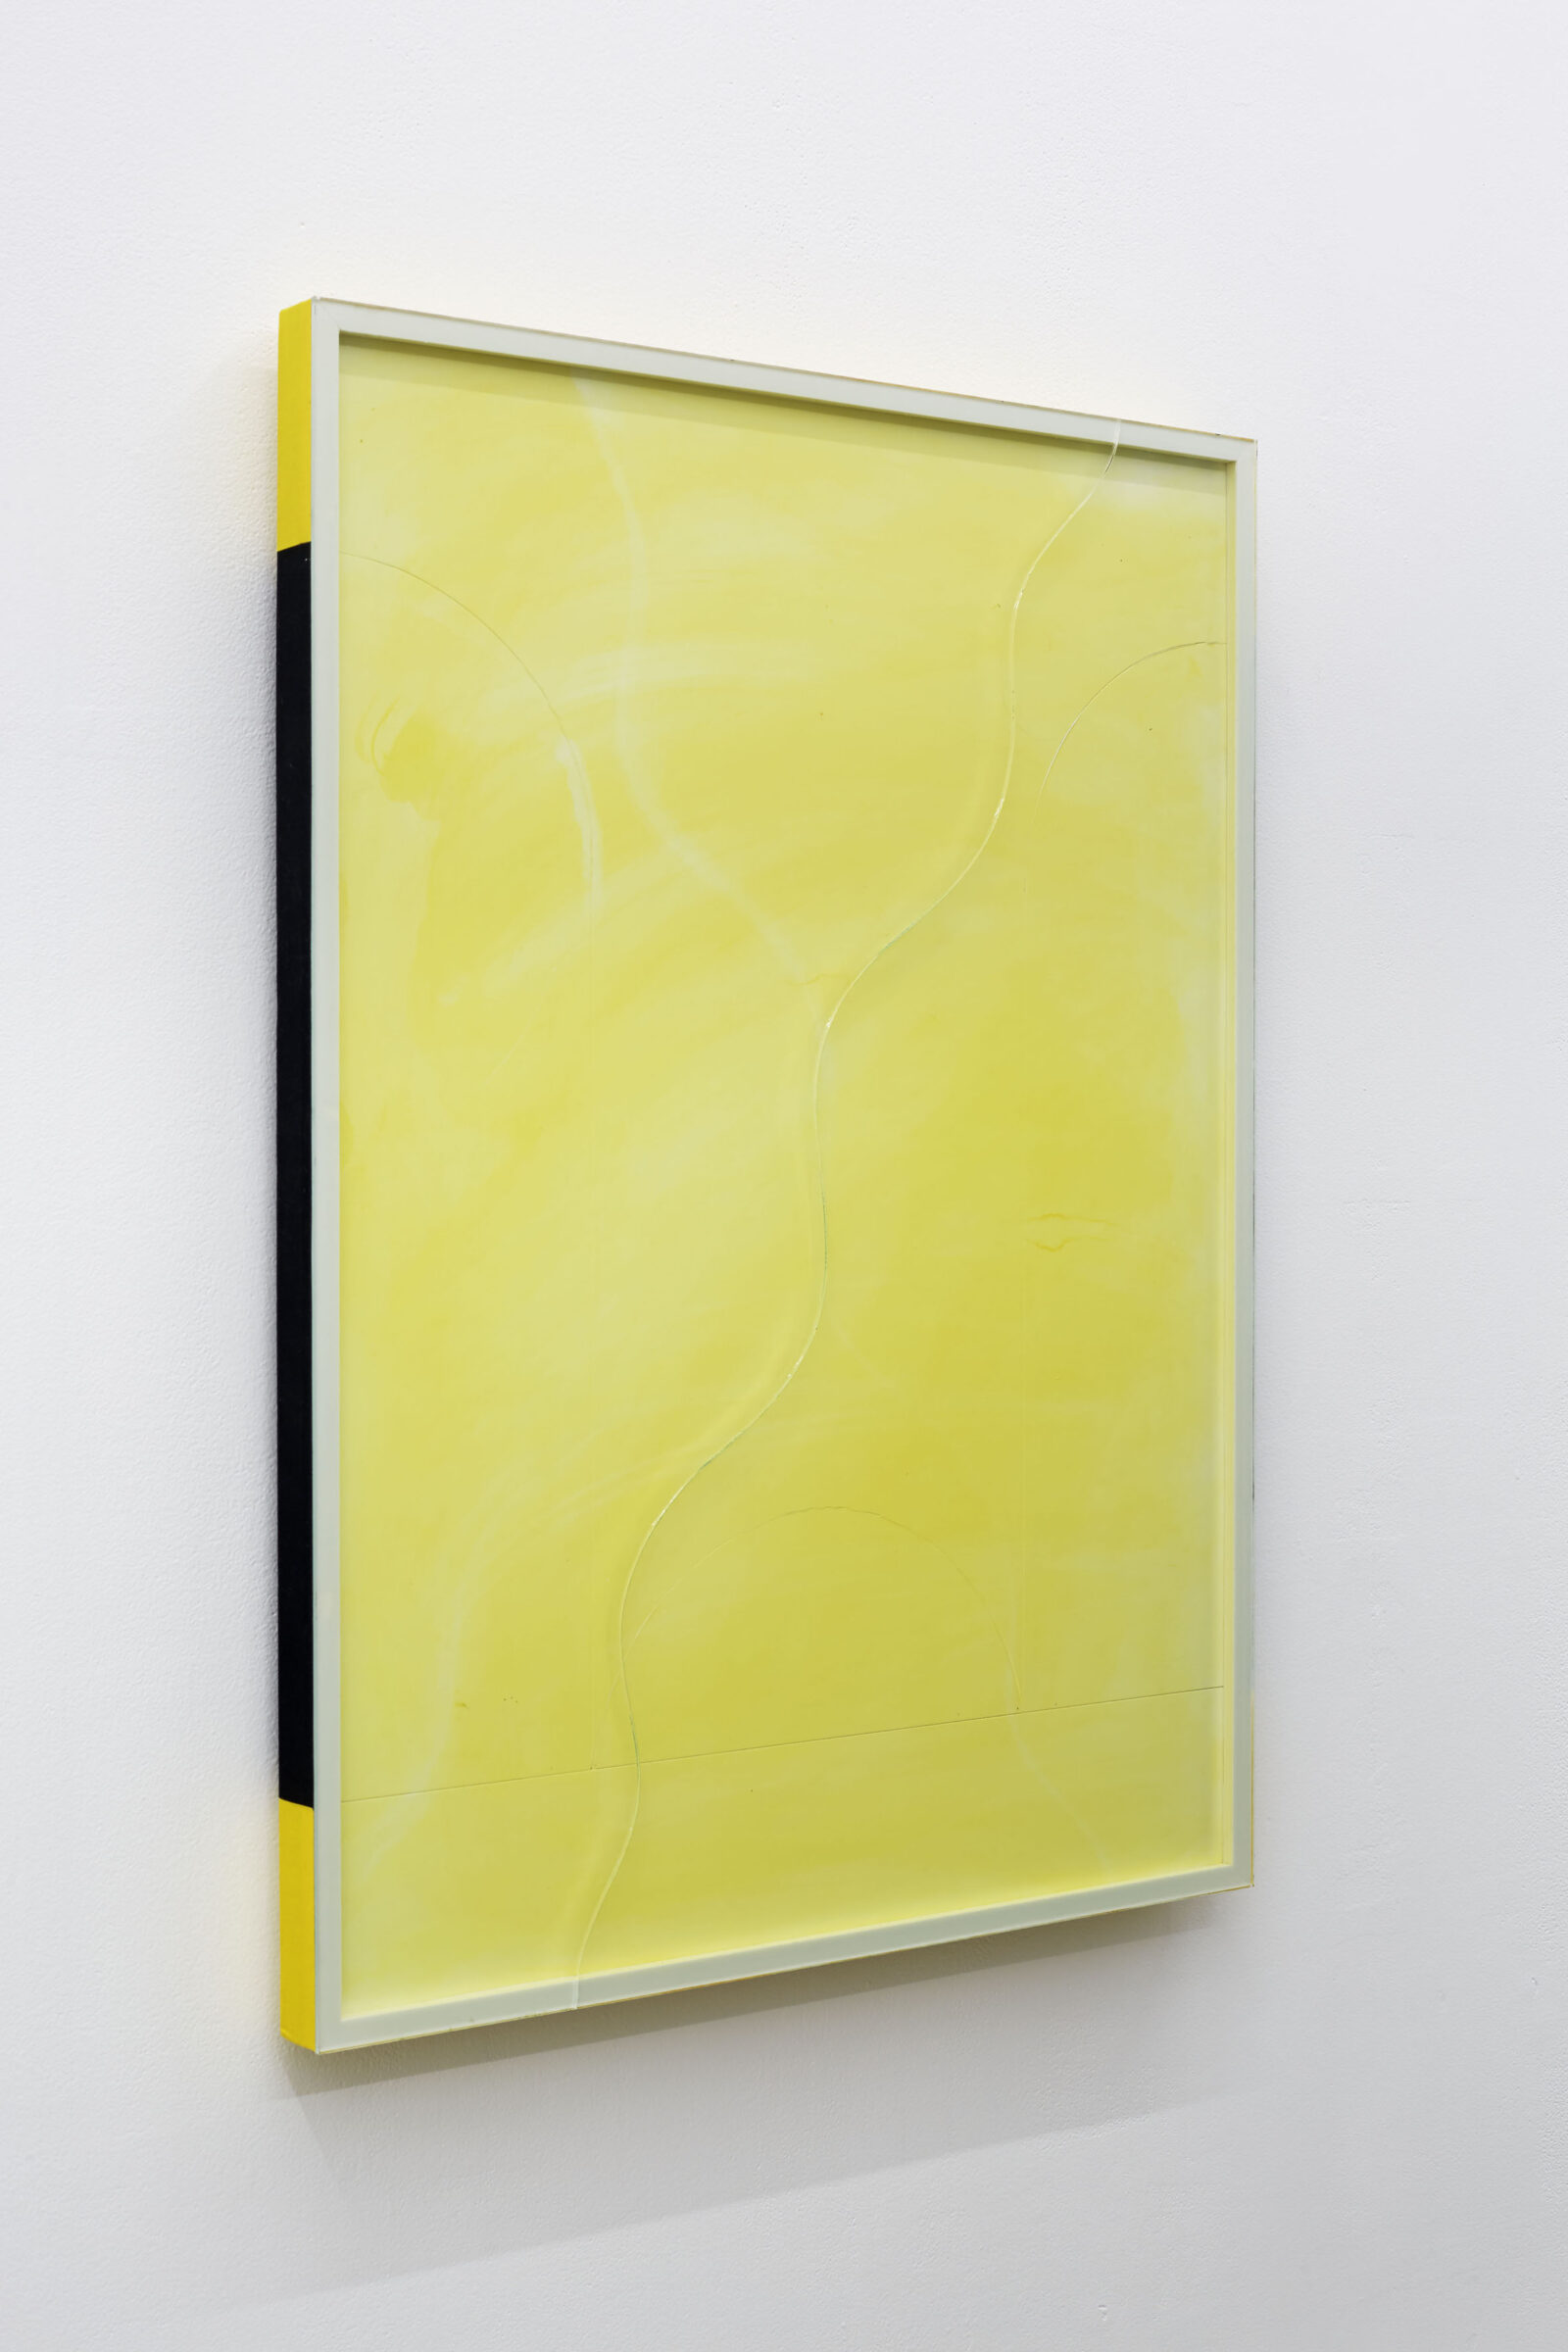 Marcin Zarzeka
The Golden Age
2015 
gouache and plaster on glass, foamcore, double-sided tape, rayon tape
61 x 44 cm